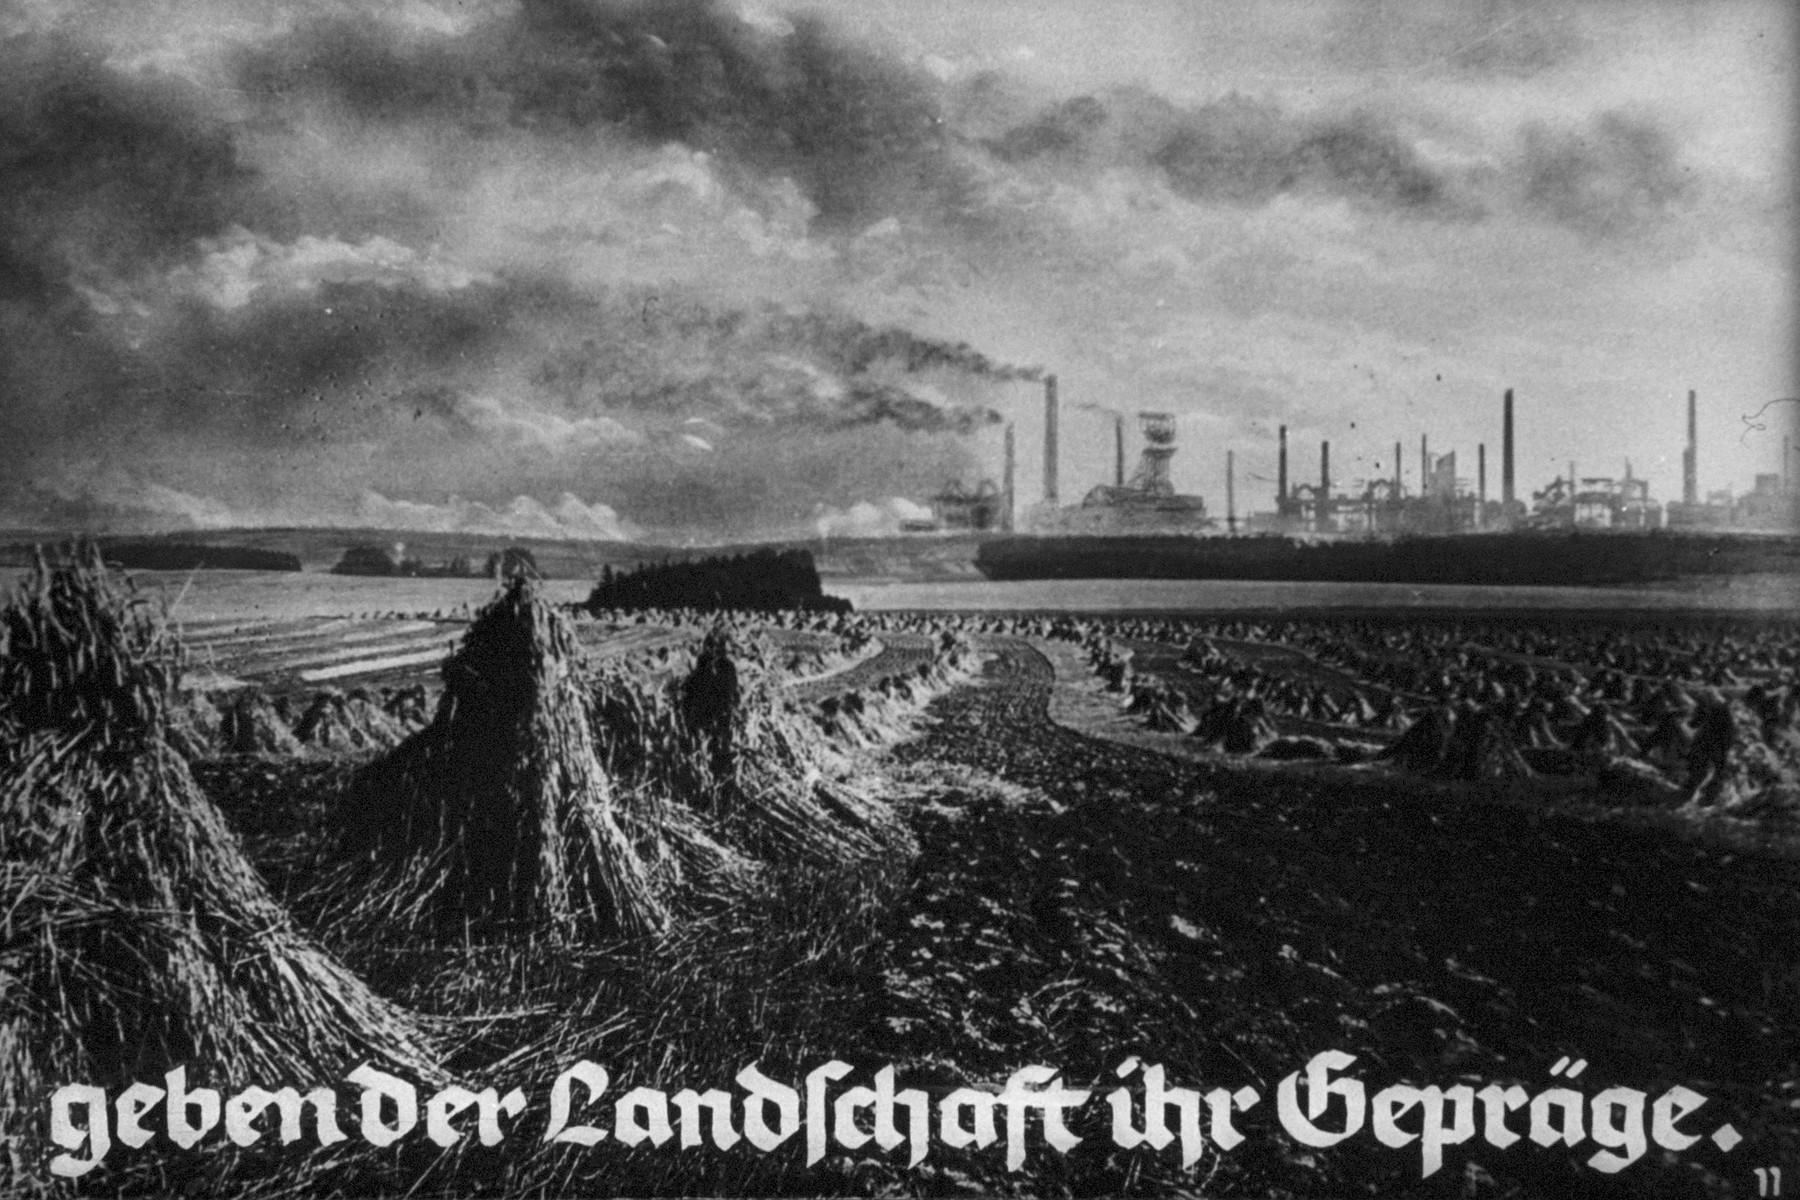 12th Nazi propaganda slide from Hitler Youth educational material titled "Border Land Upper Silesia."

Gewaltige Industrieanlagen...
//
Huge industrial plants ...